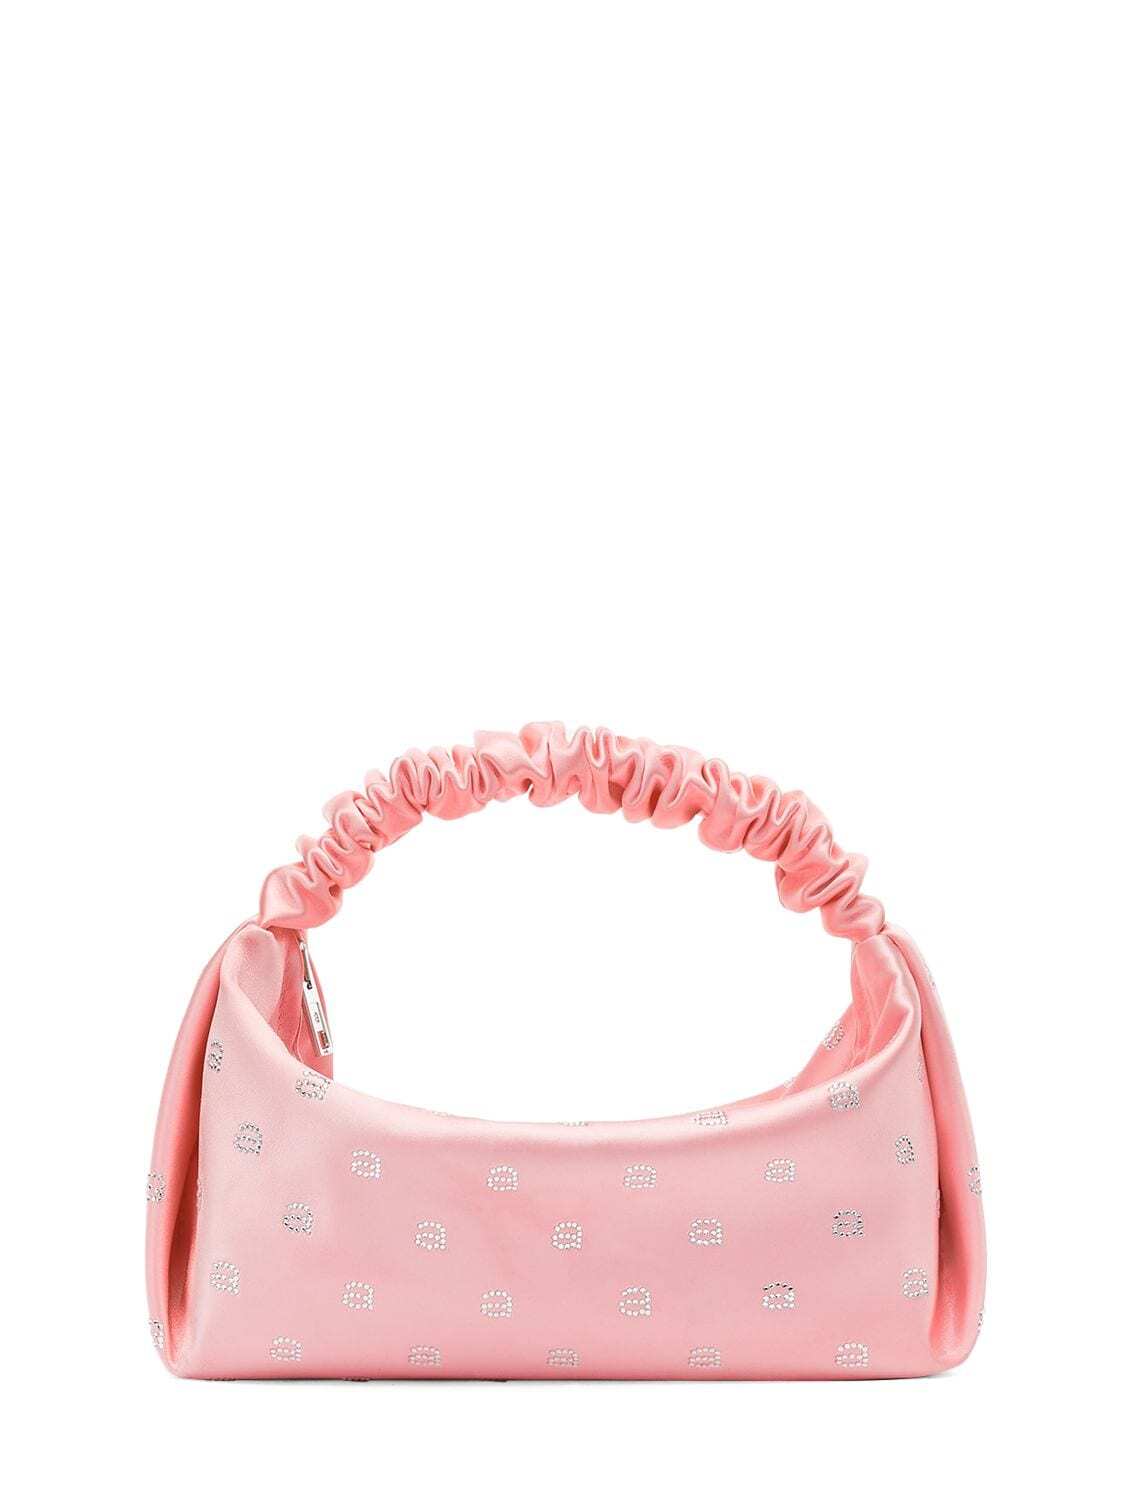 ALEXANDER WANG Mini Scrunchie Top Handle Bag in pink